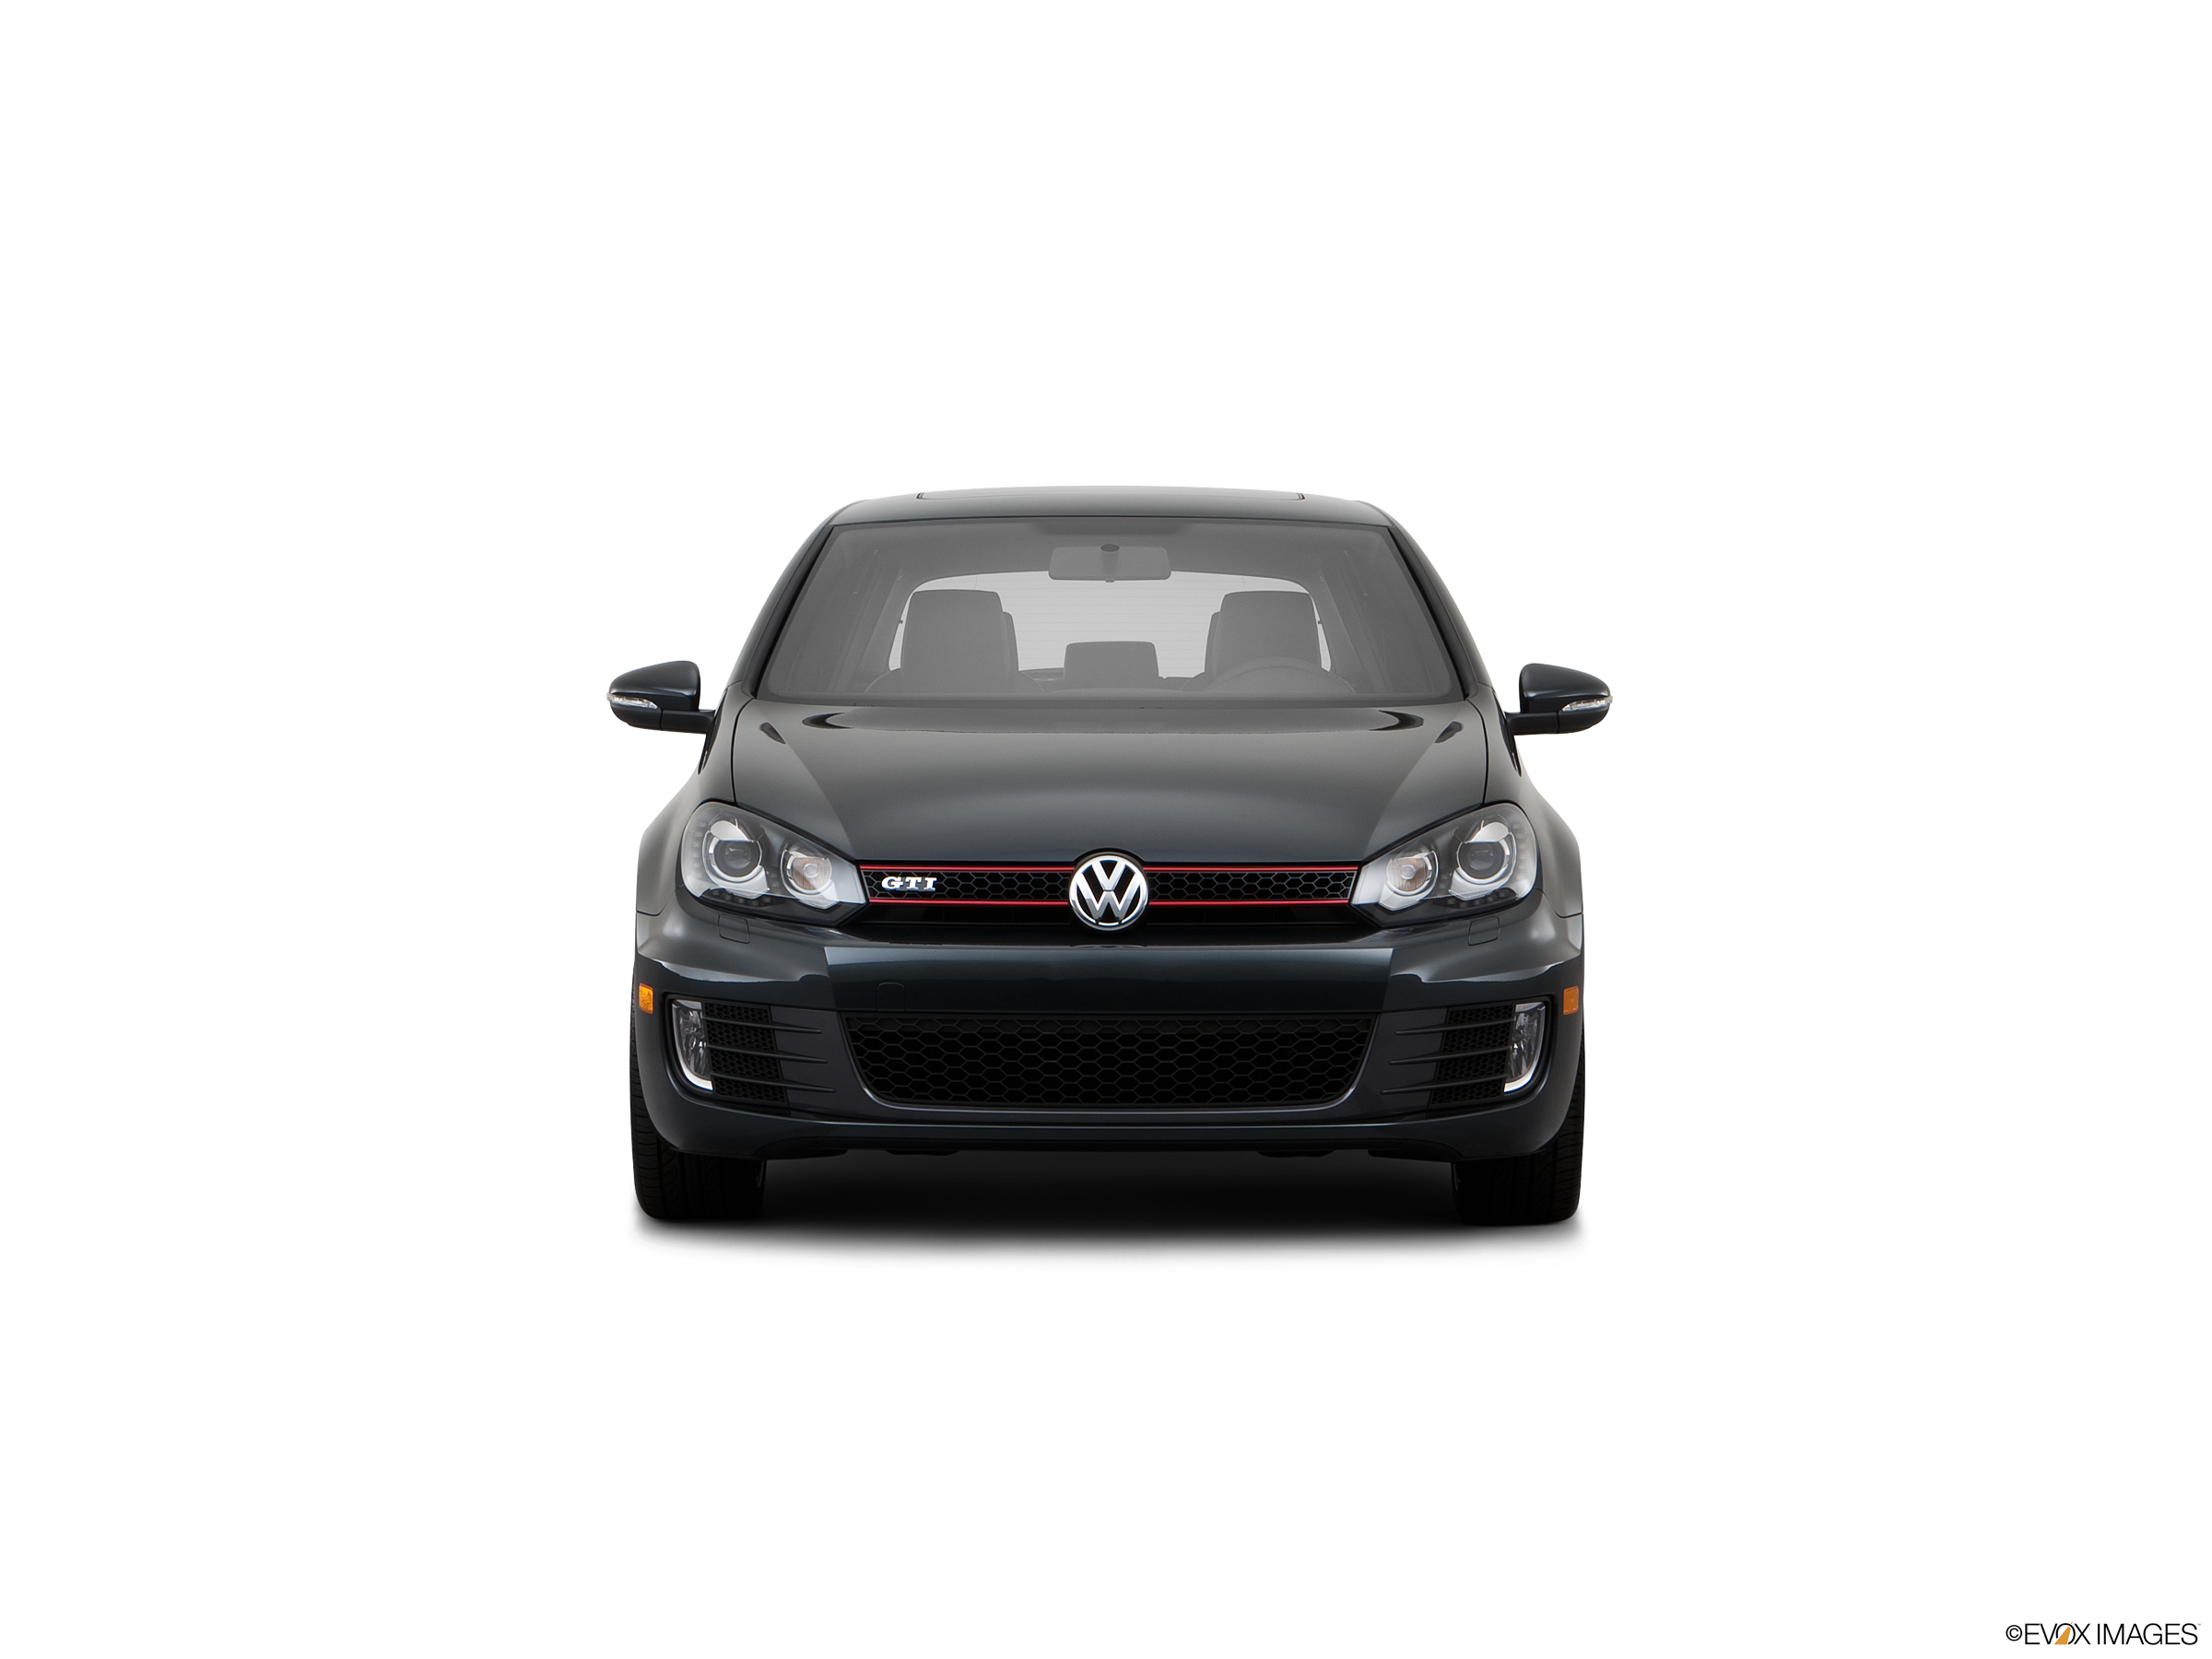 Used Volkswagen Golf GTI 2013-2017 review